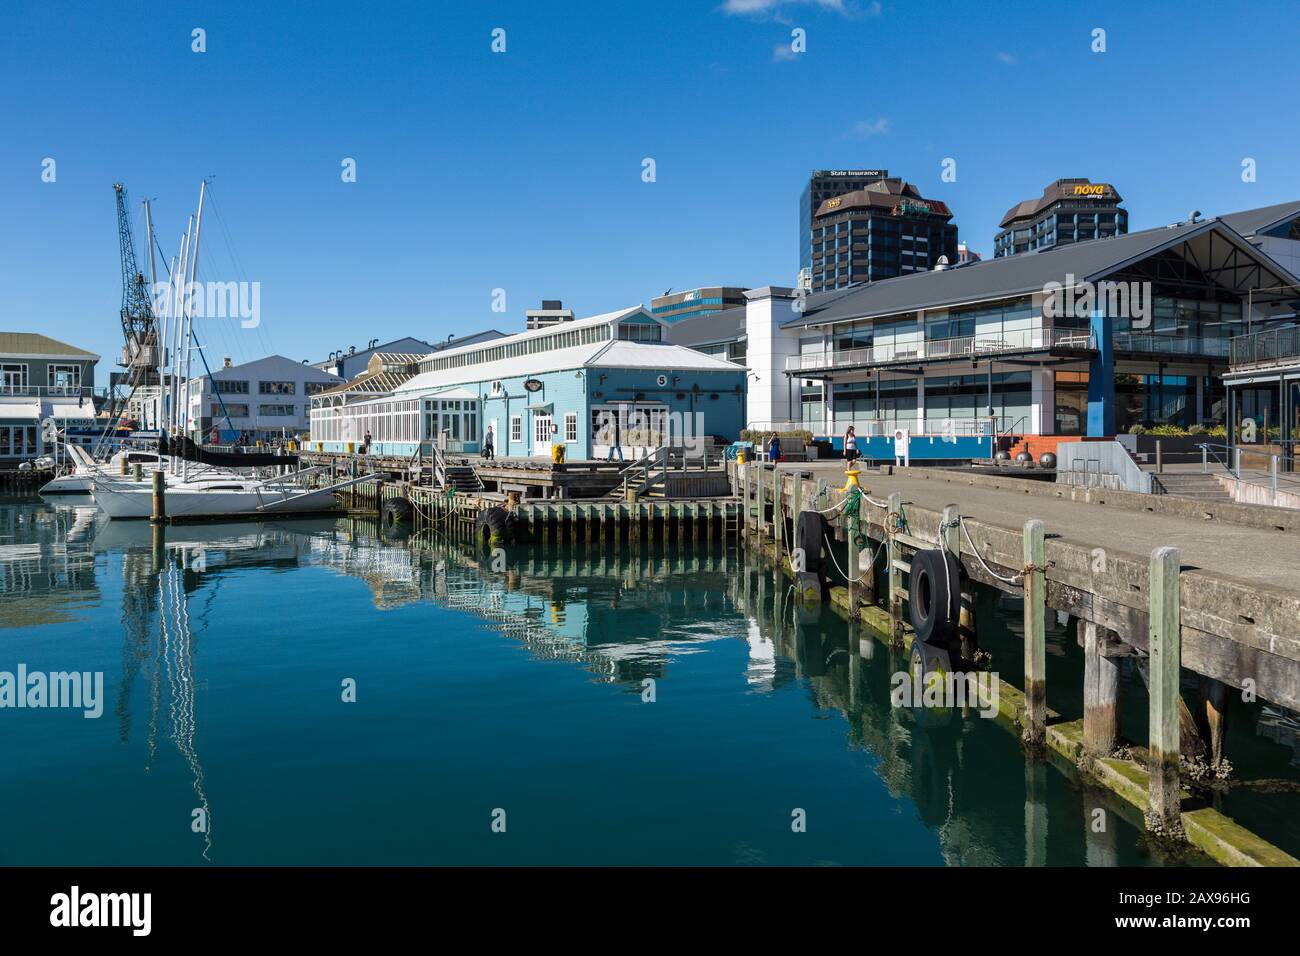 Wellington waterfront restaurants and boardwalk, New Zealand Stock Photo